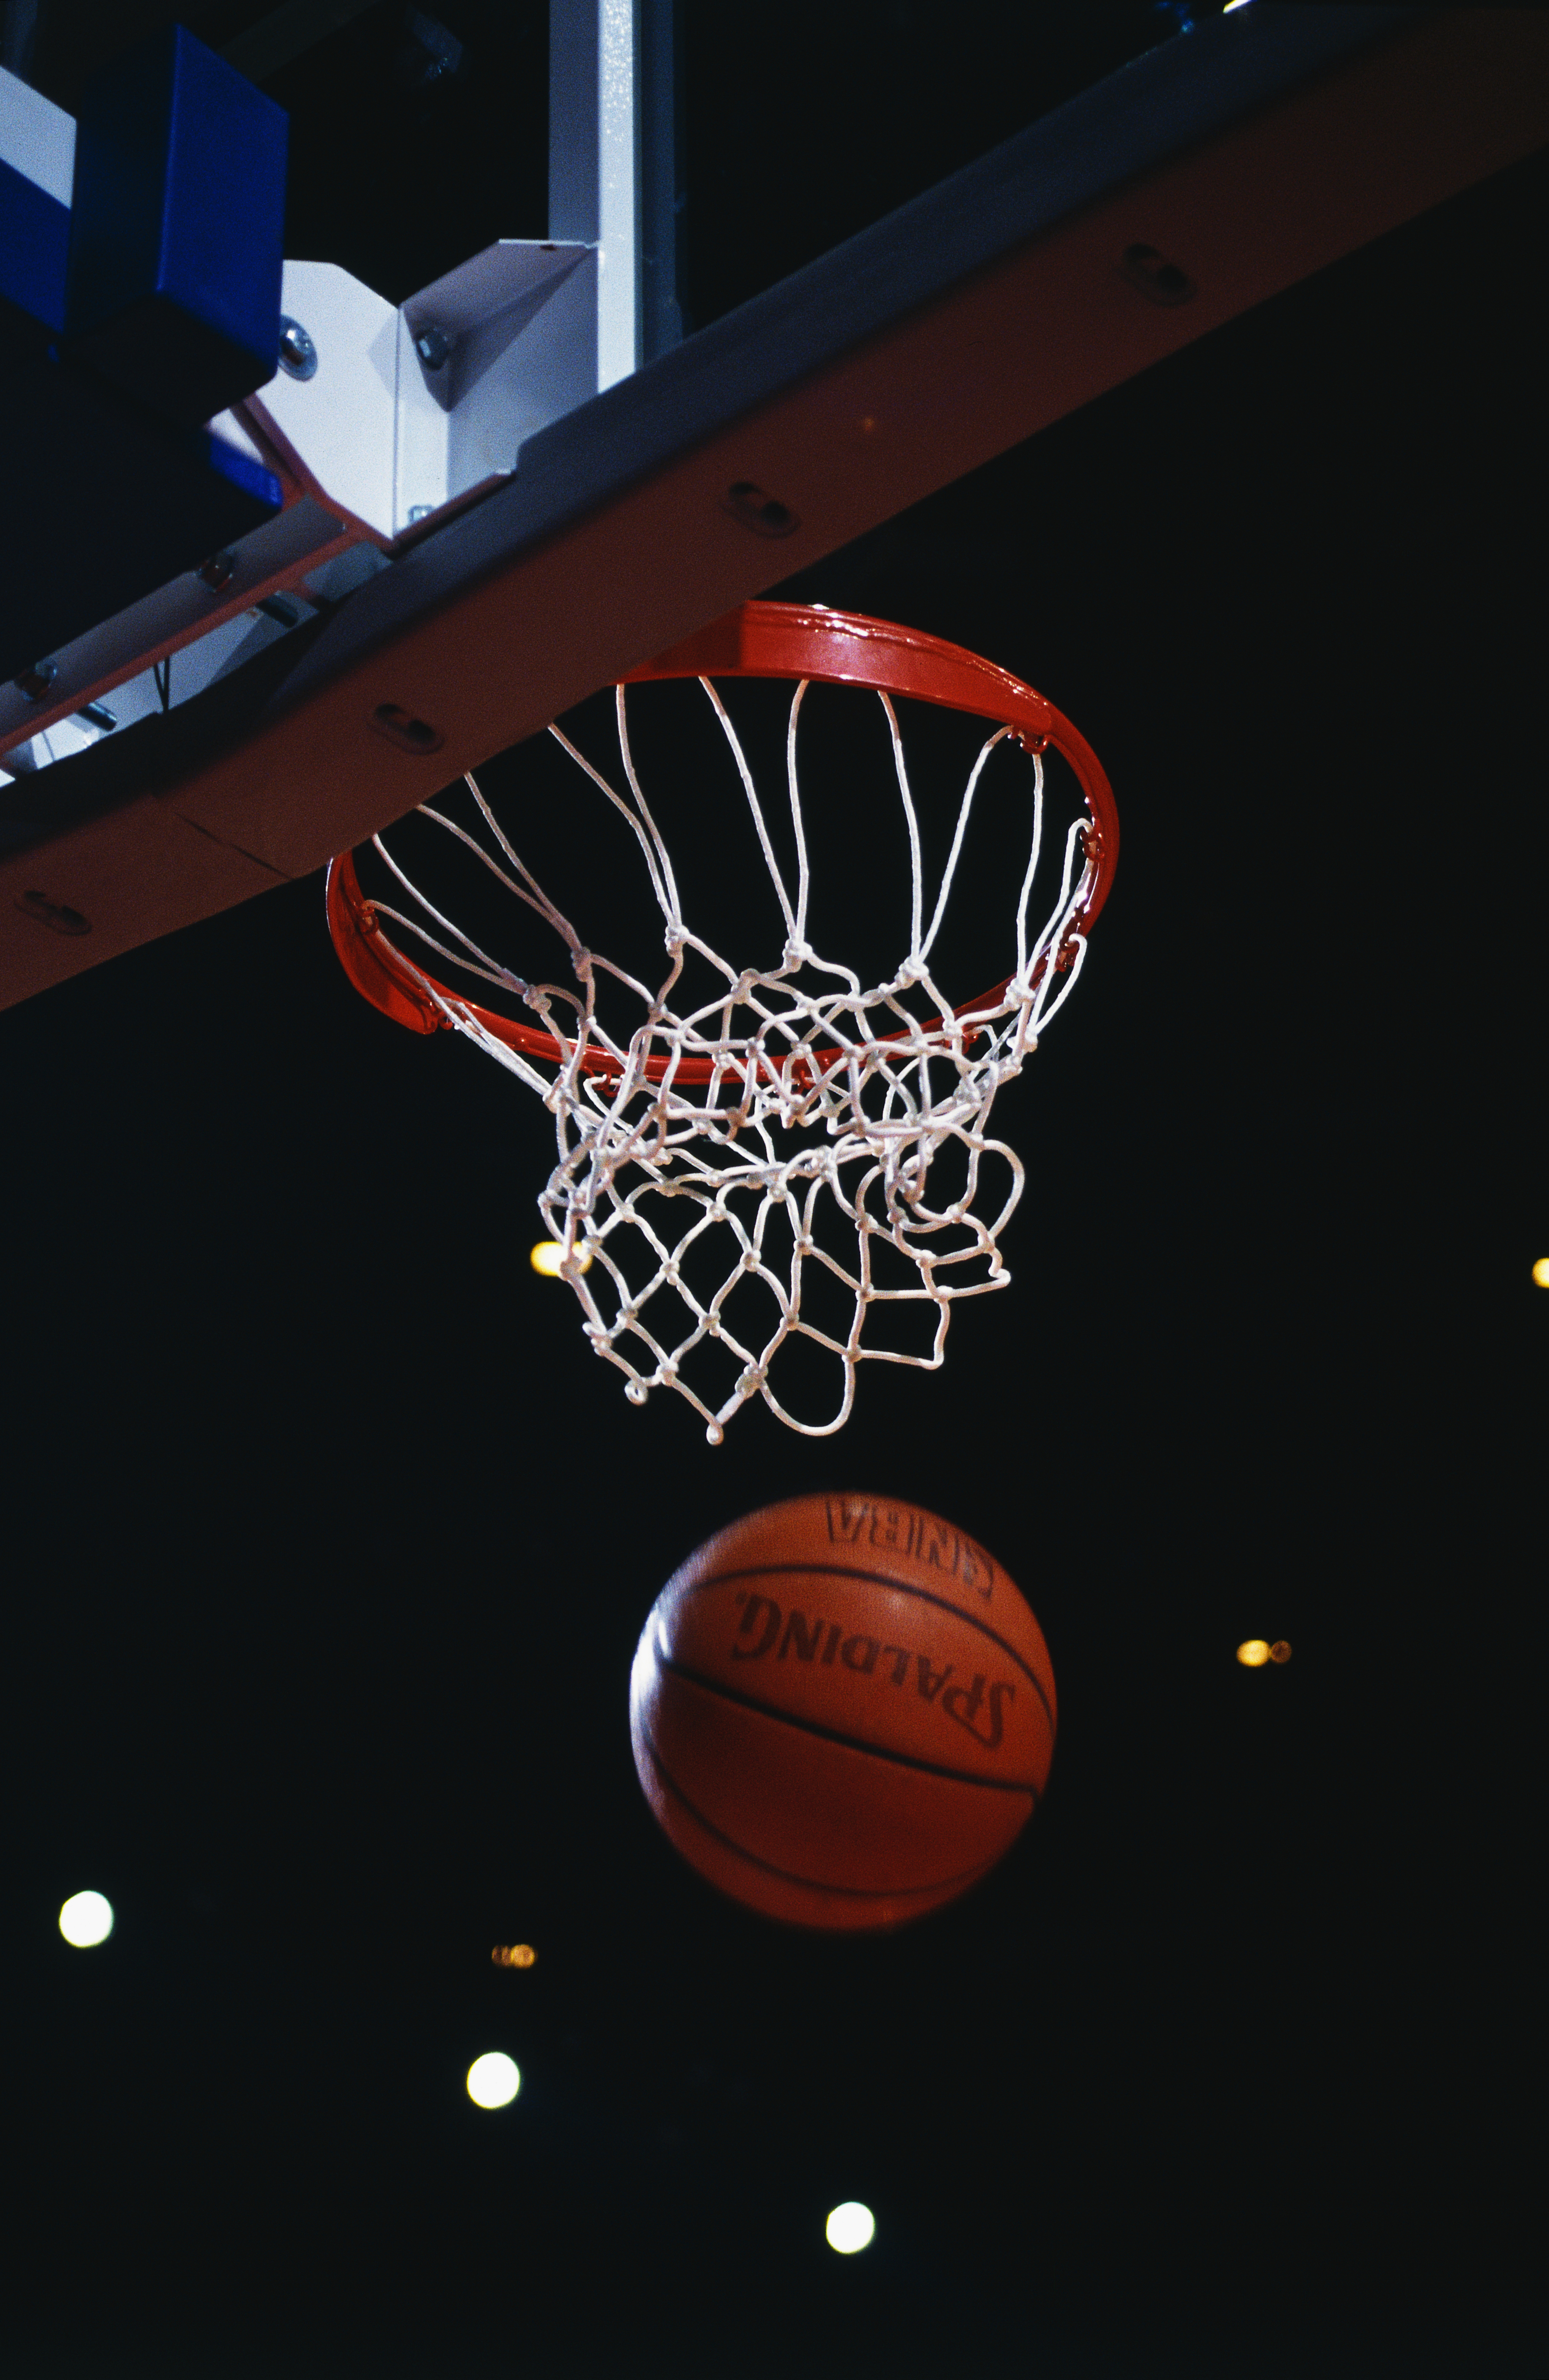 Basketball and Hoop